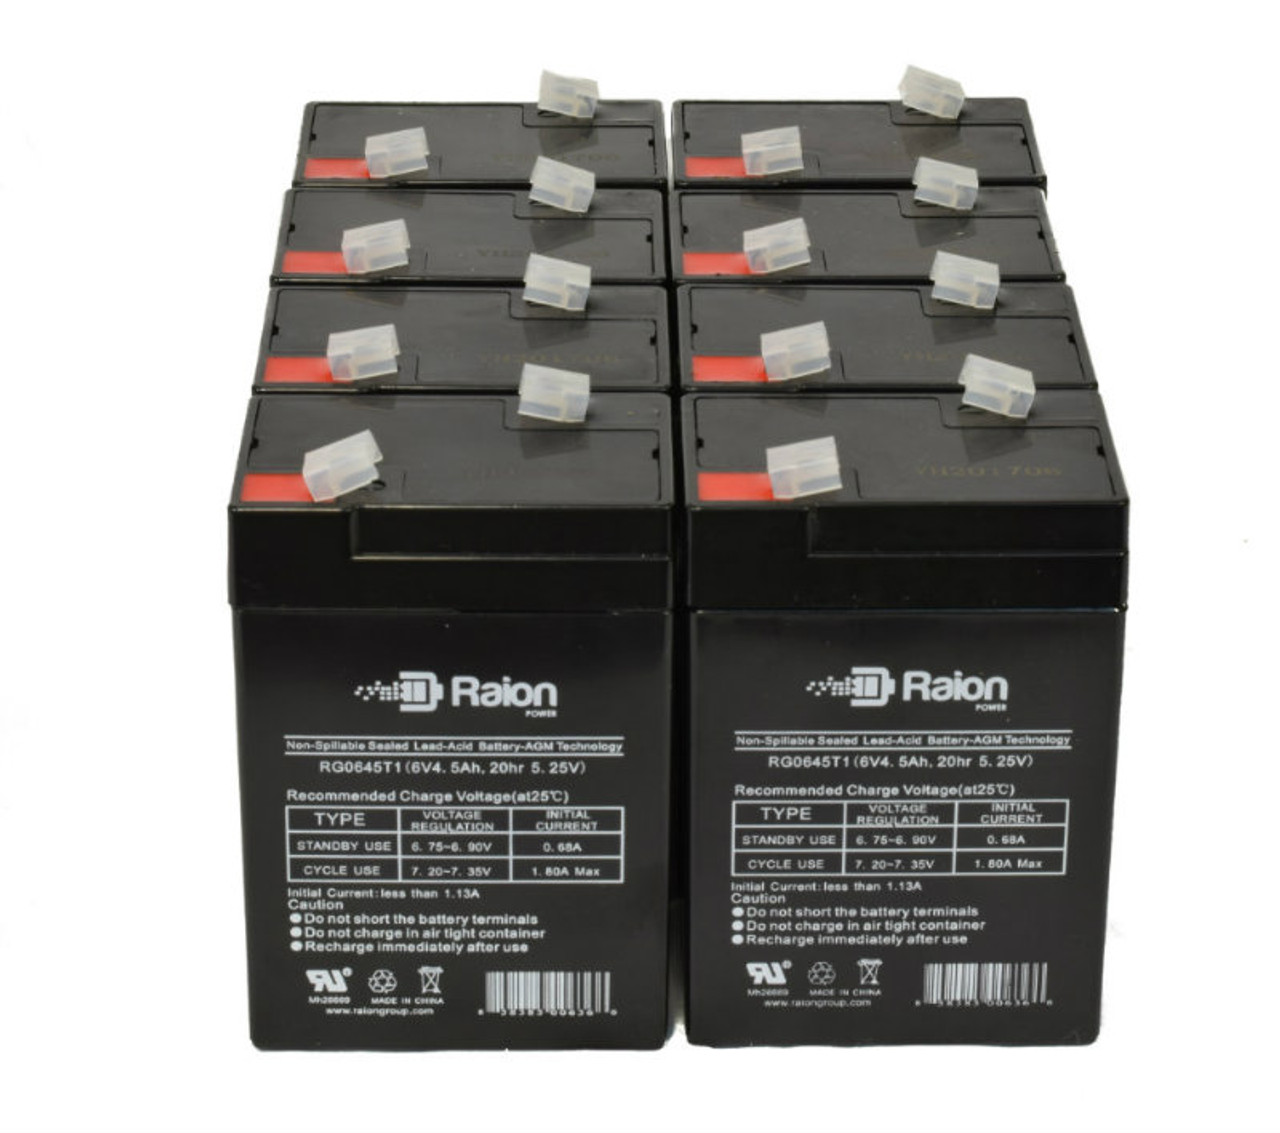 Raion Power 6V 4.5Ah Replacement Emergency Light Battery for Teledyne 1180005 - 8 Pack